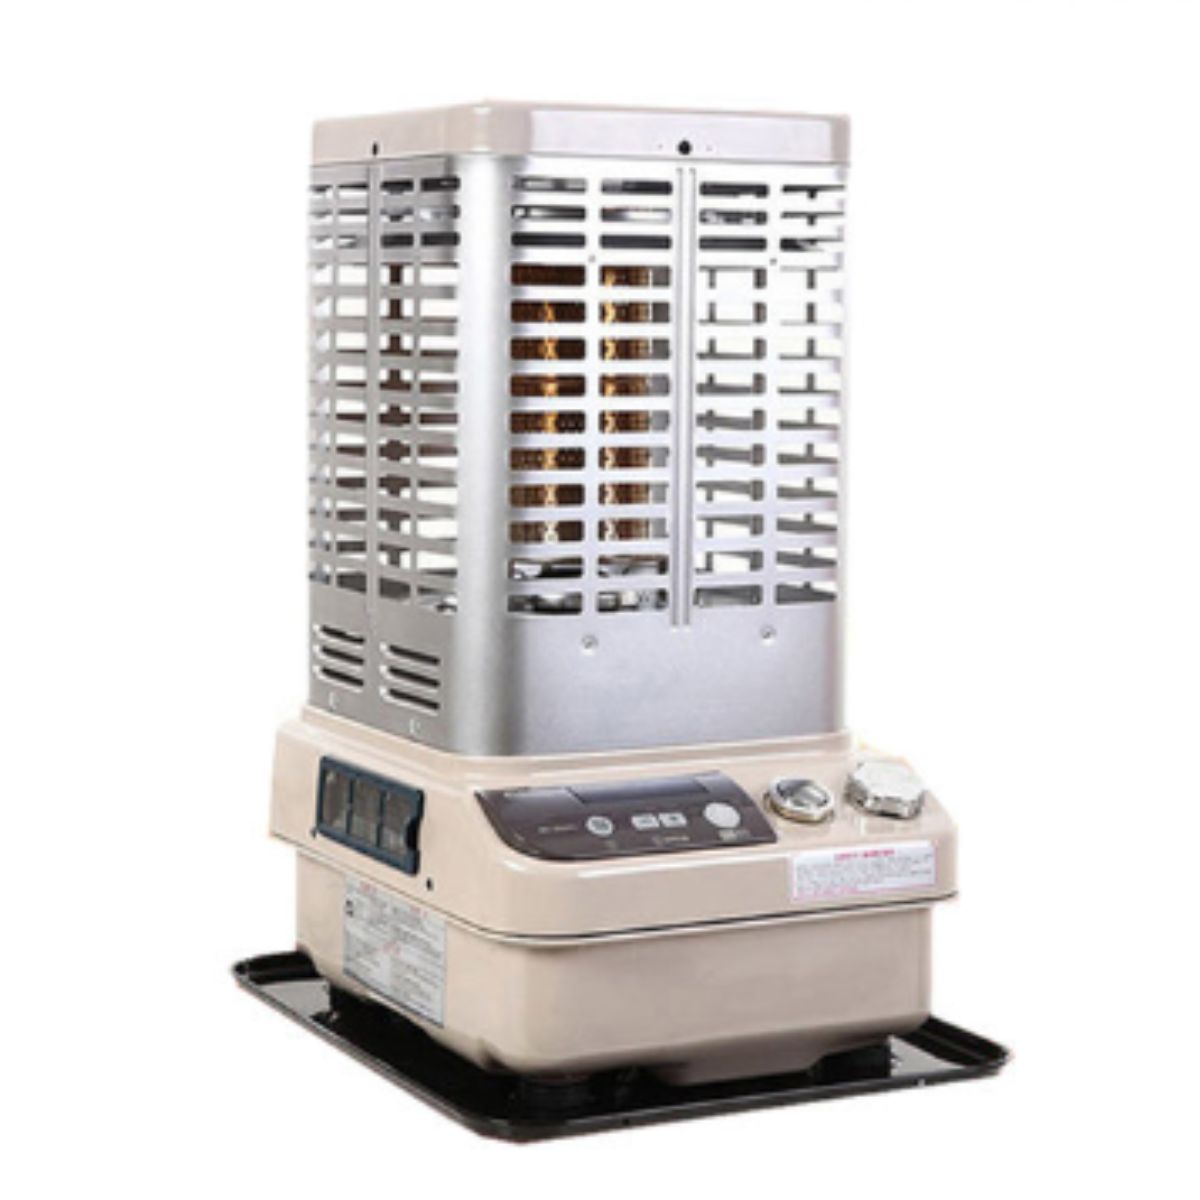 Shinil Heater Kerosene And Electric - SRH-8000PC - White